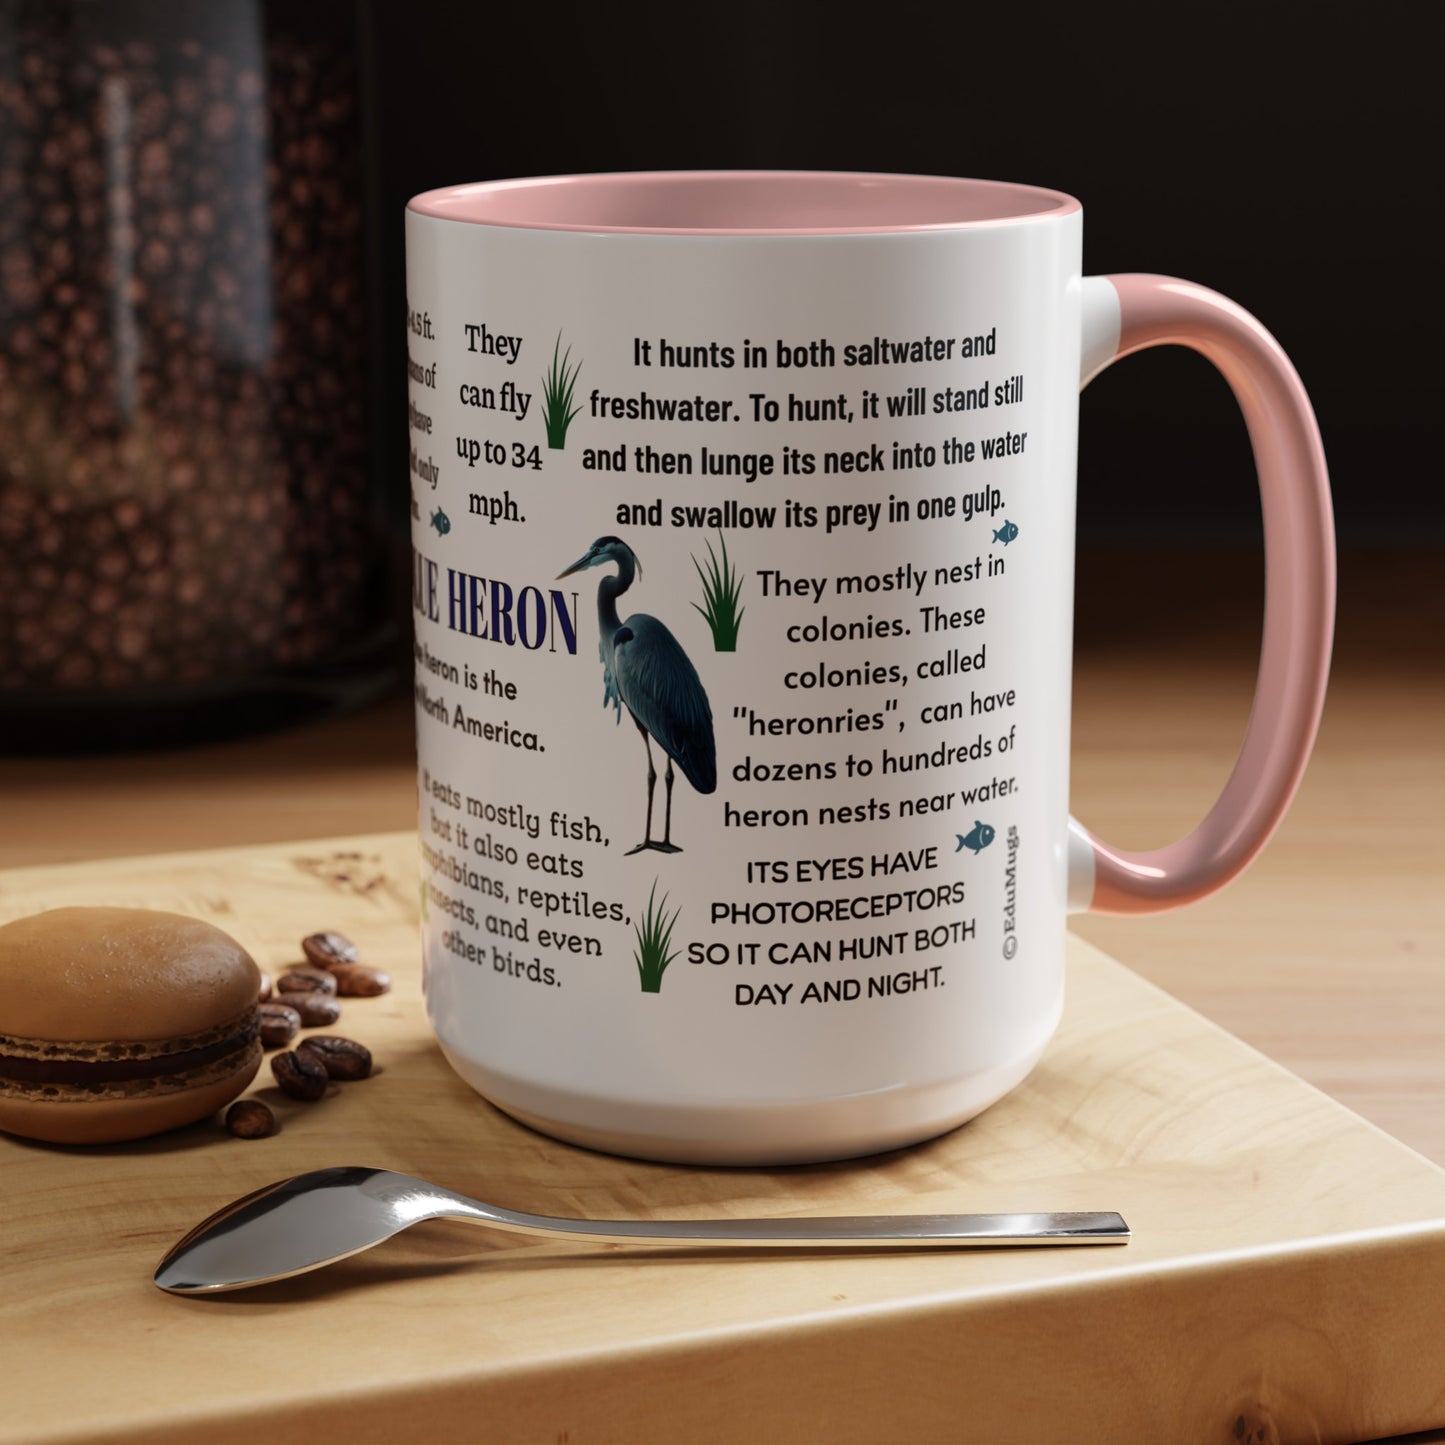 Great Blue Heron Coffee Mug, 11 oz or 15oz